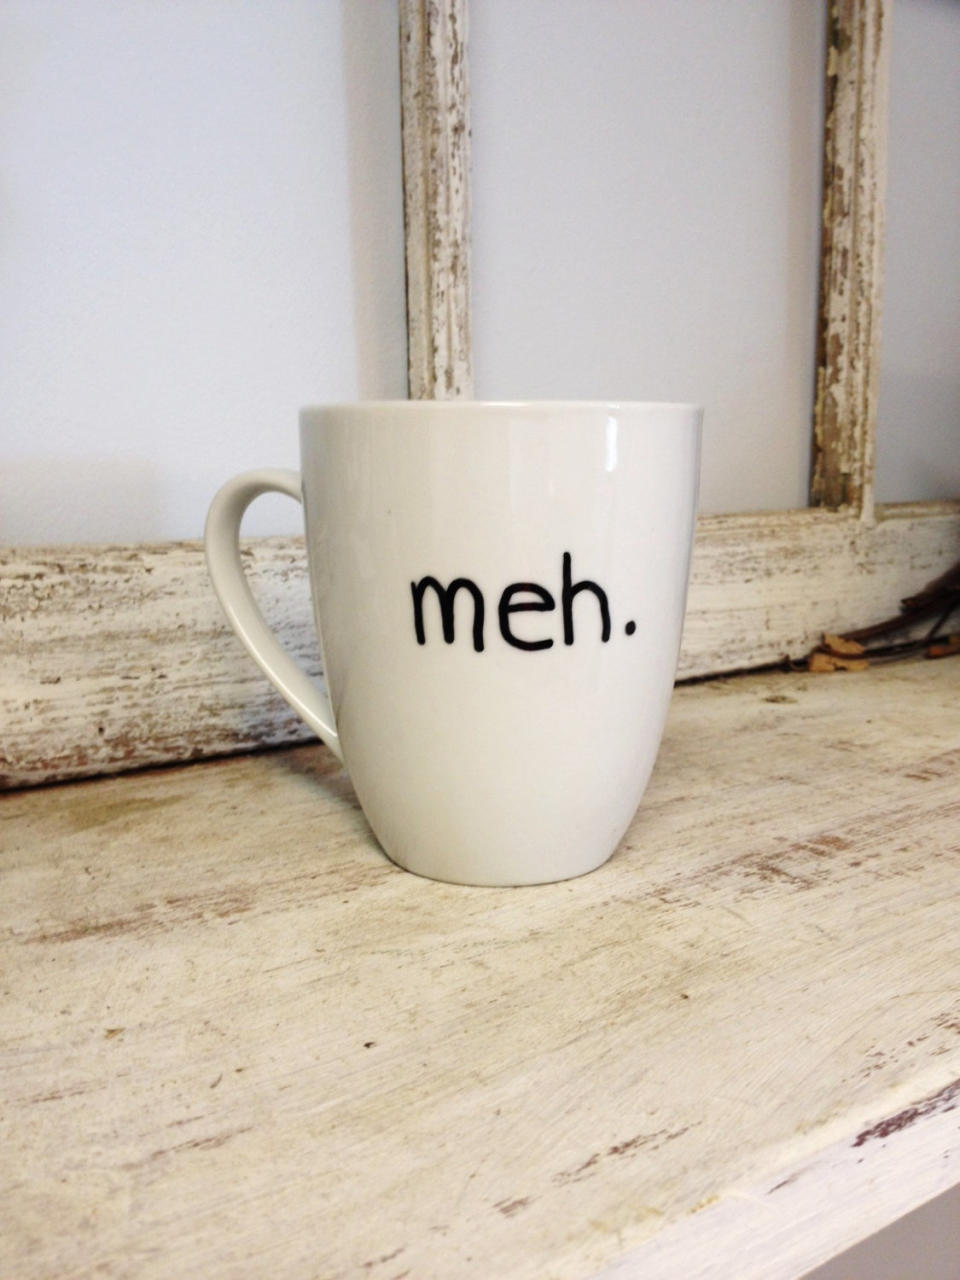 <a href="https://www.etsy.com/listing/174486432/meh-coffee-mug">Meh. Coffee Mug, $16</a>